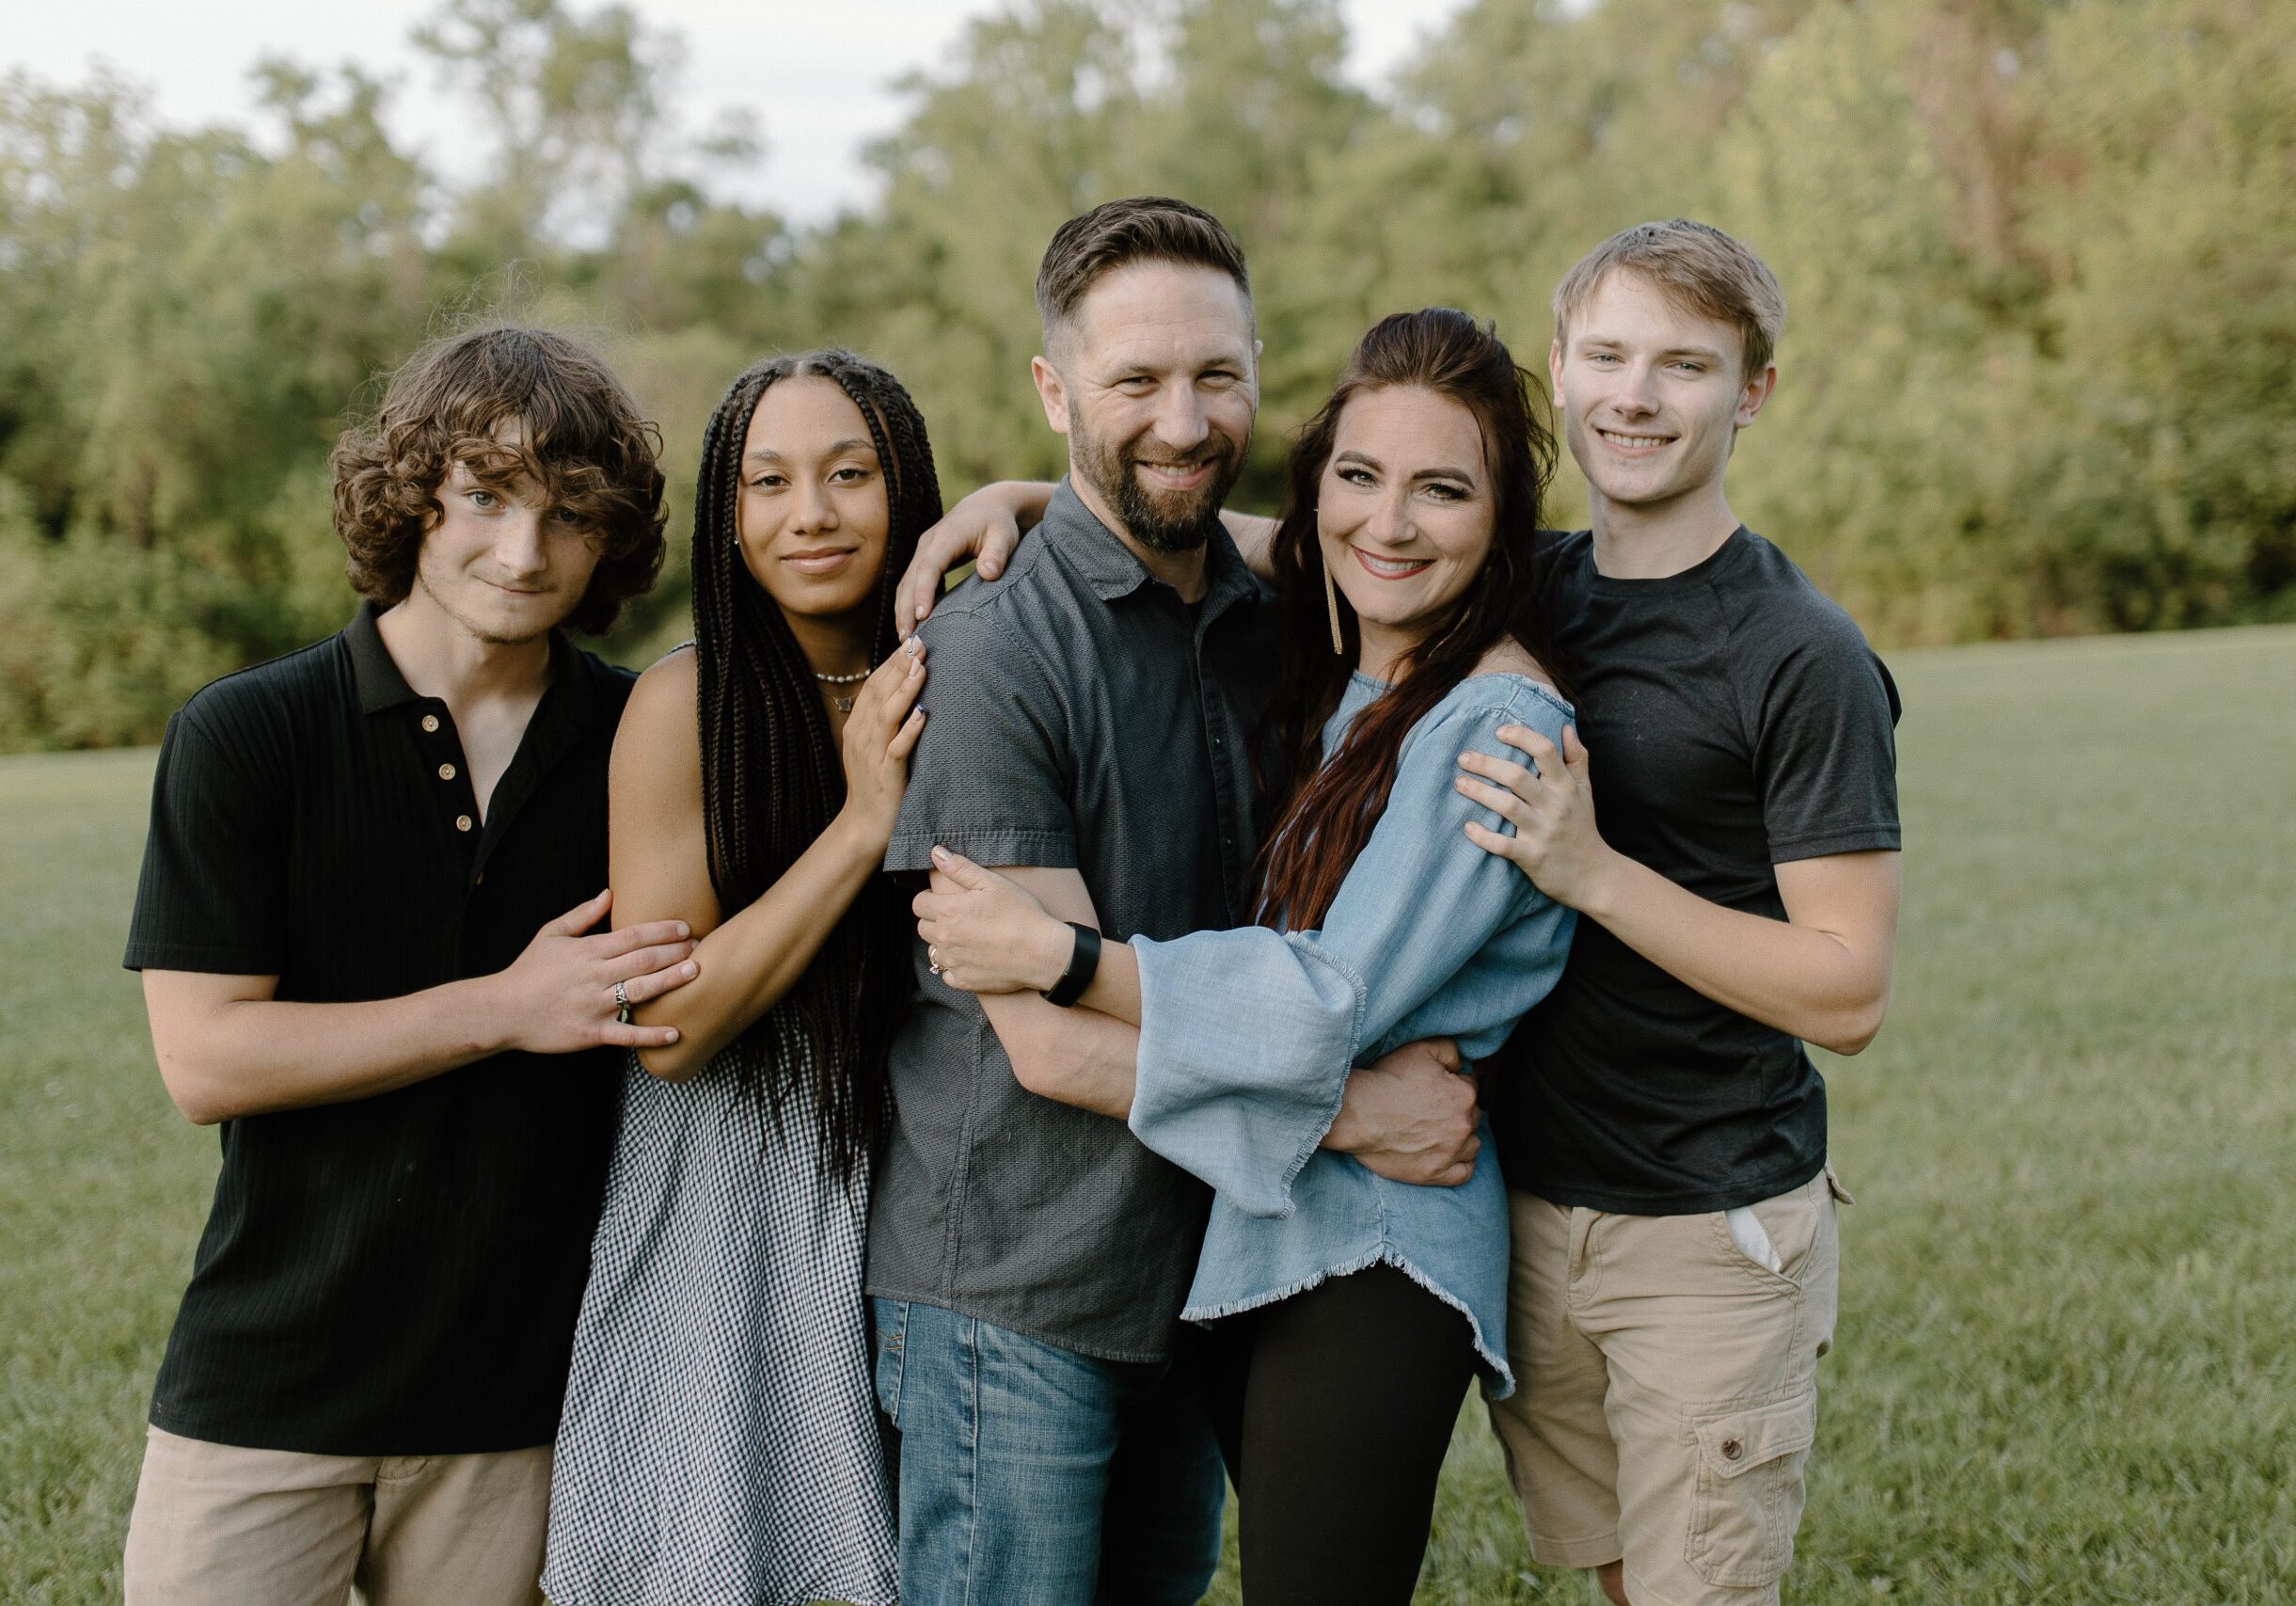 Pastor Jon Ferguson and his family posing happily outdoors